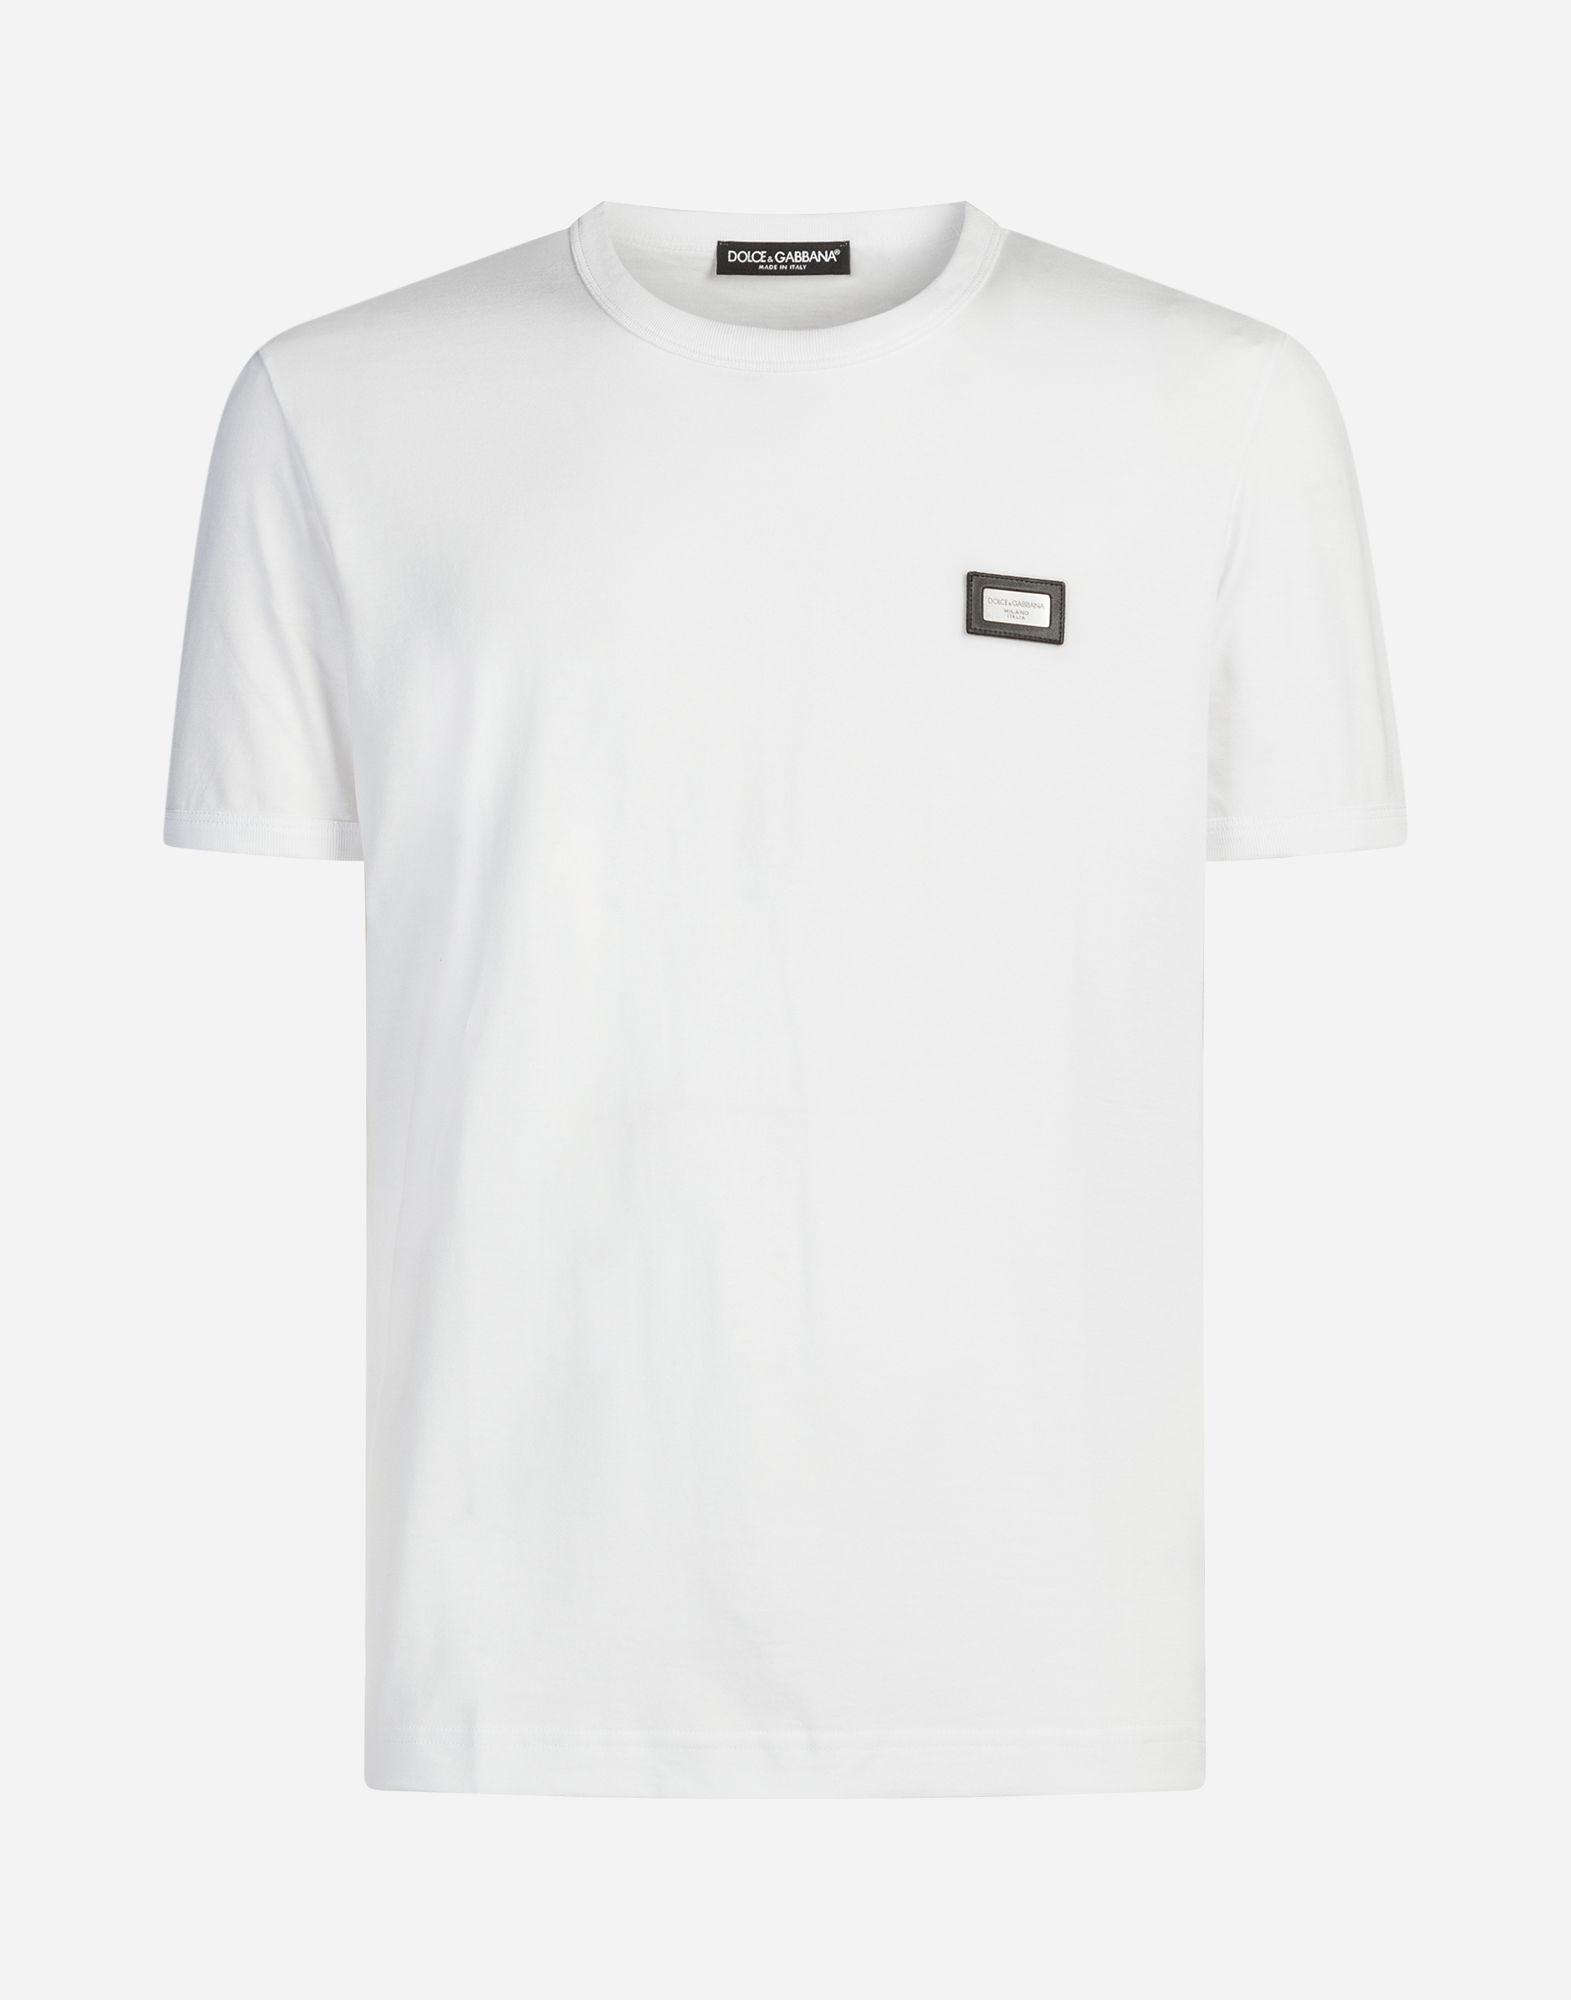 Dolce \u0026 Gabbana T-shirt In Cotton With 